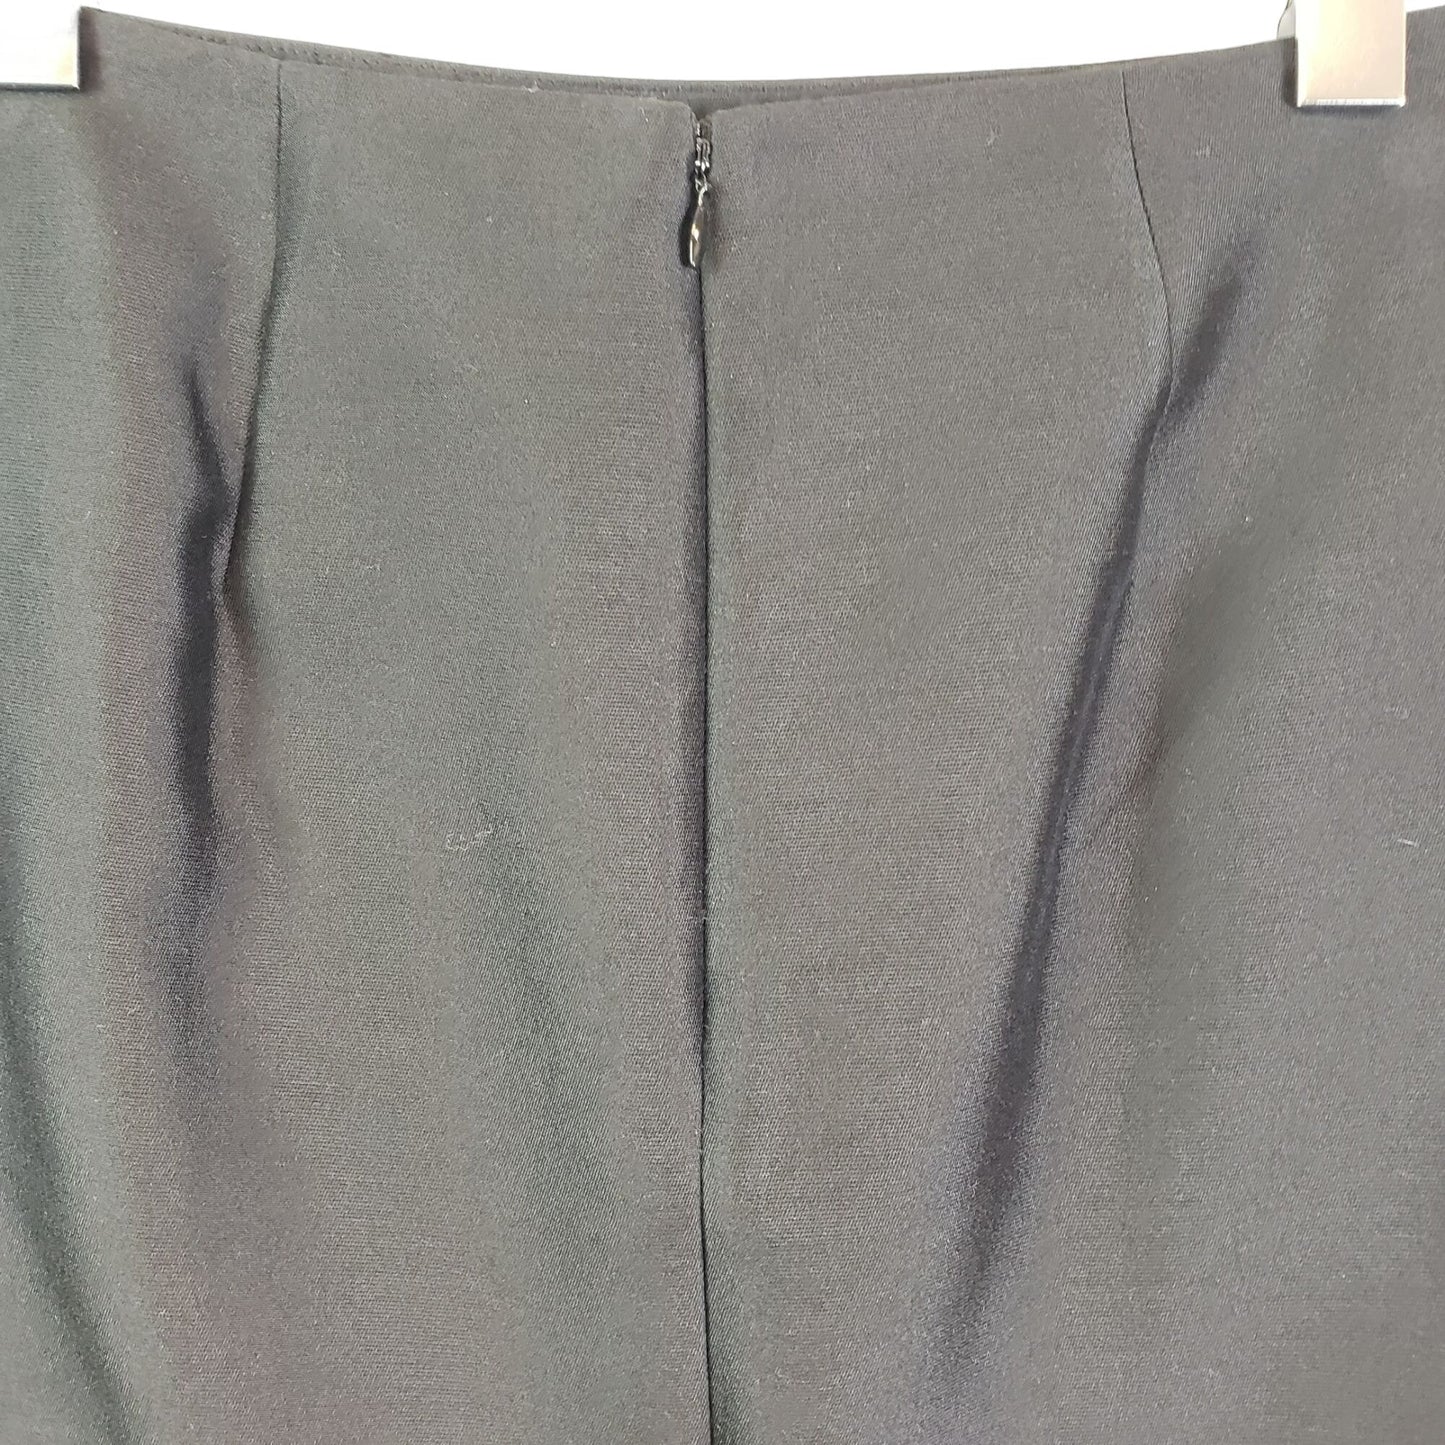 Talbots Black Pencil Skirt Size 2